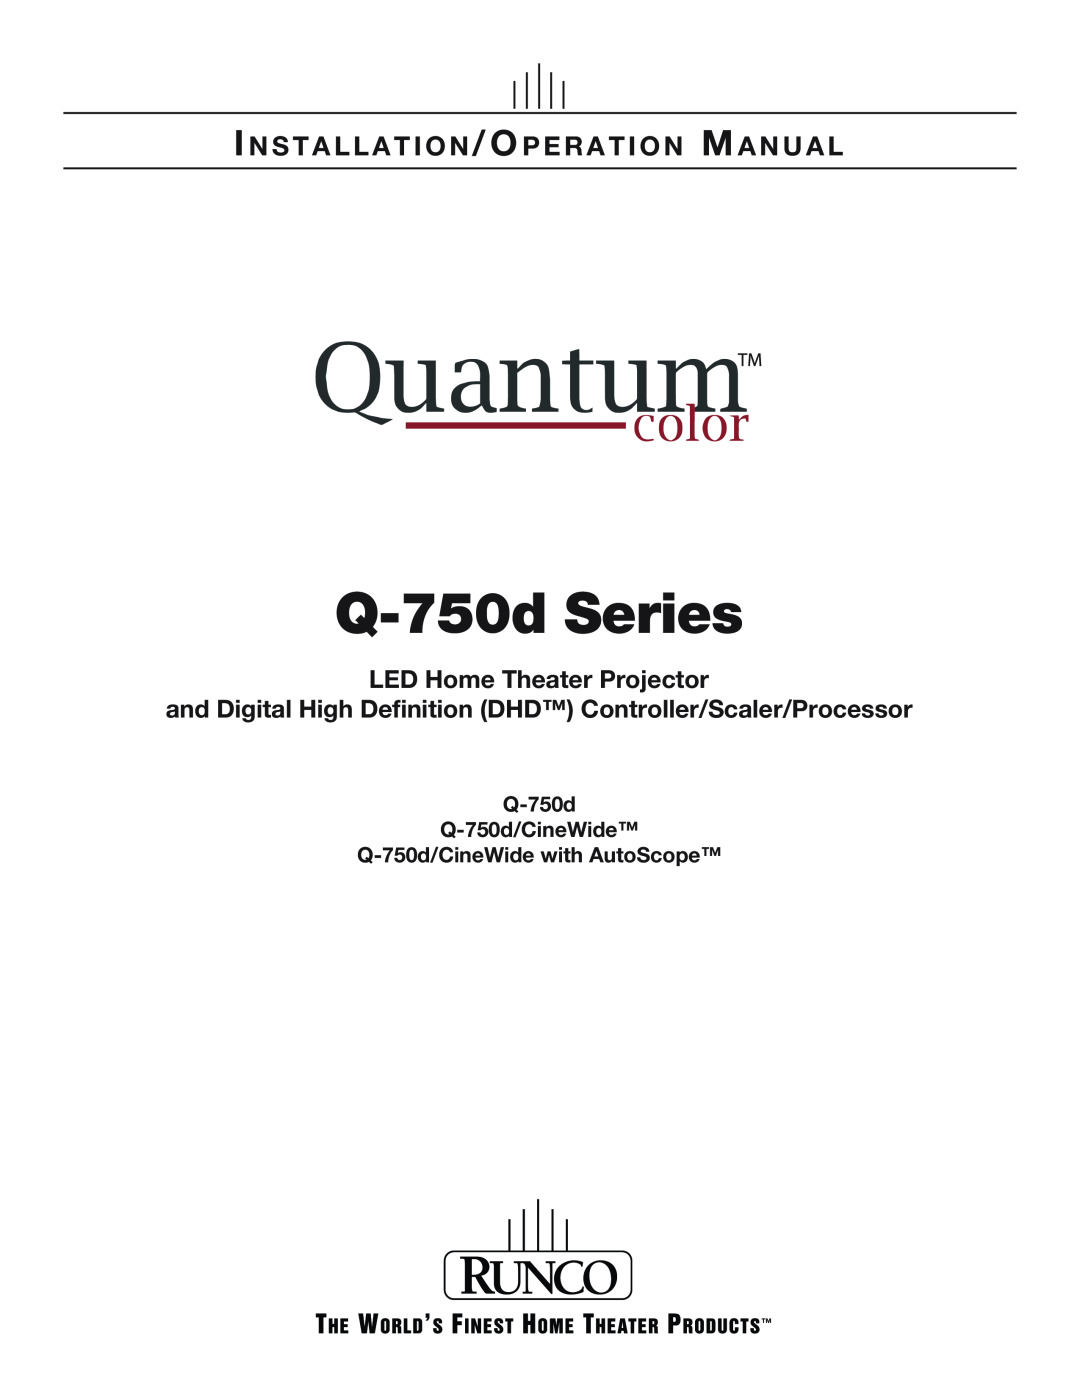 Runco Q-750D operation manual Q-750d Q-750d/CineWide, Q-750d/CineWidewith AutoScope, Q-750dSeries 